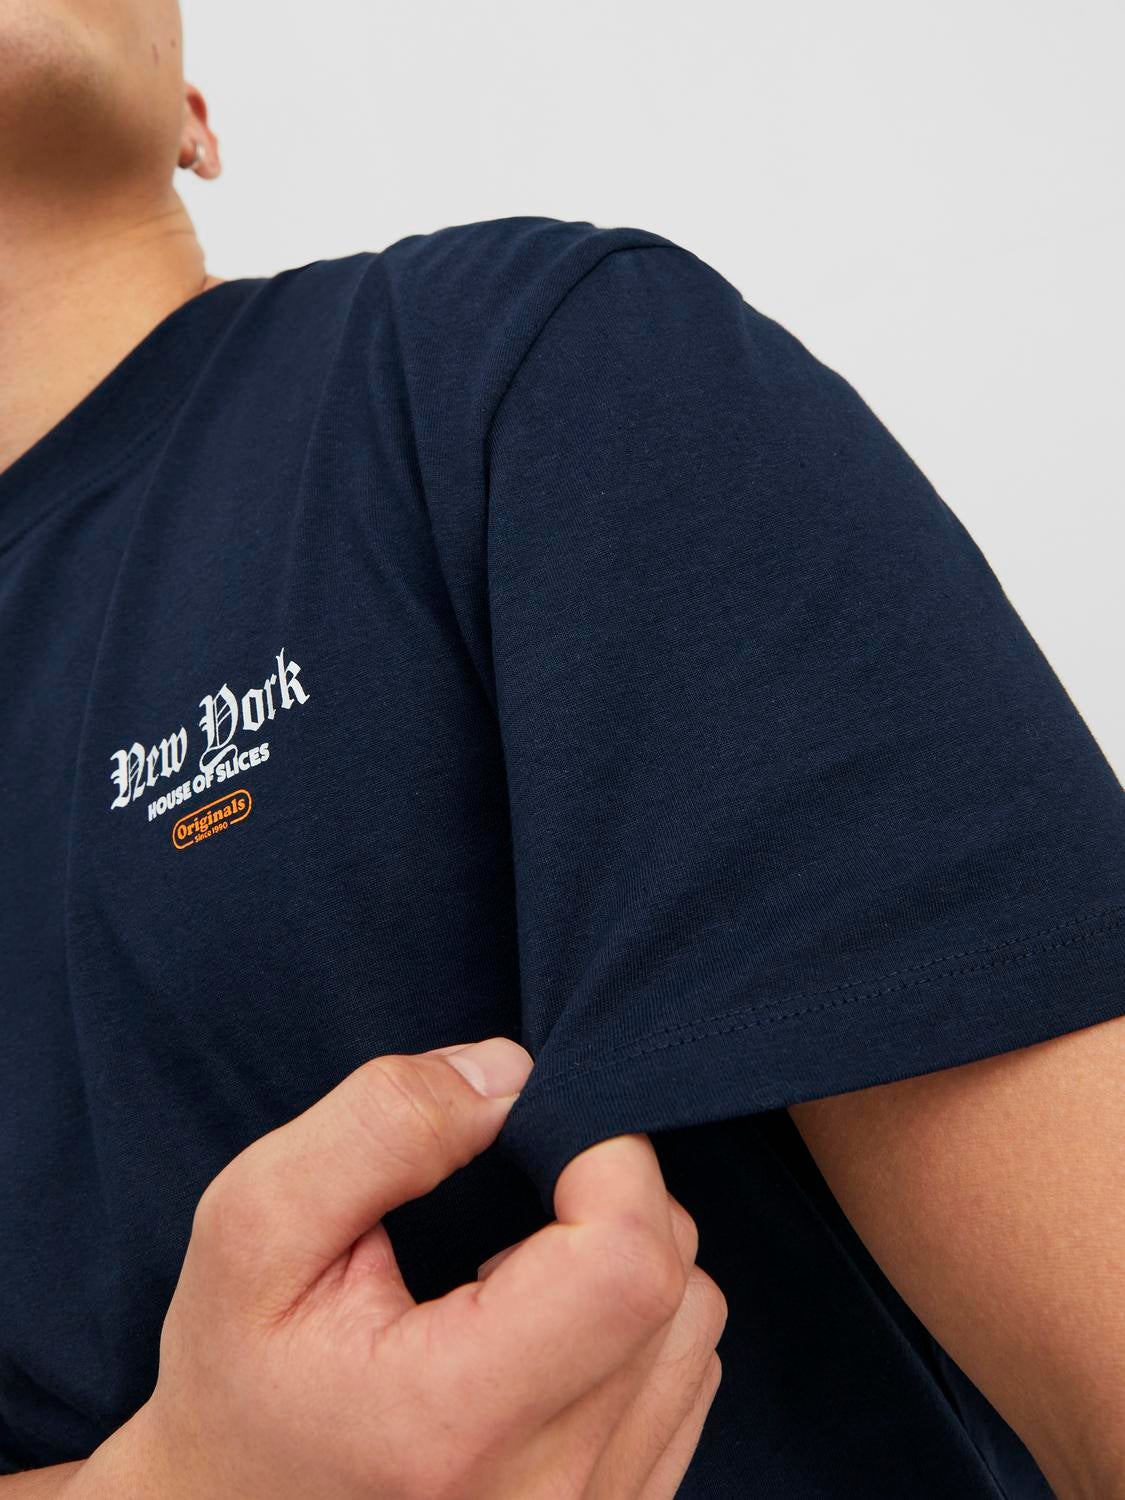 Buy Men Blue Graphic Print Crew Neck T-shirt Online - 699857